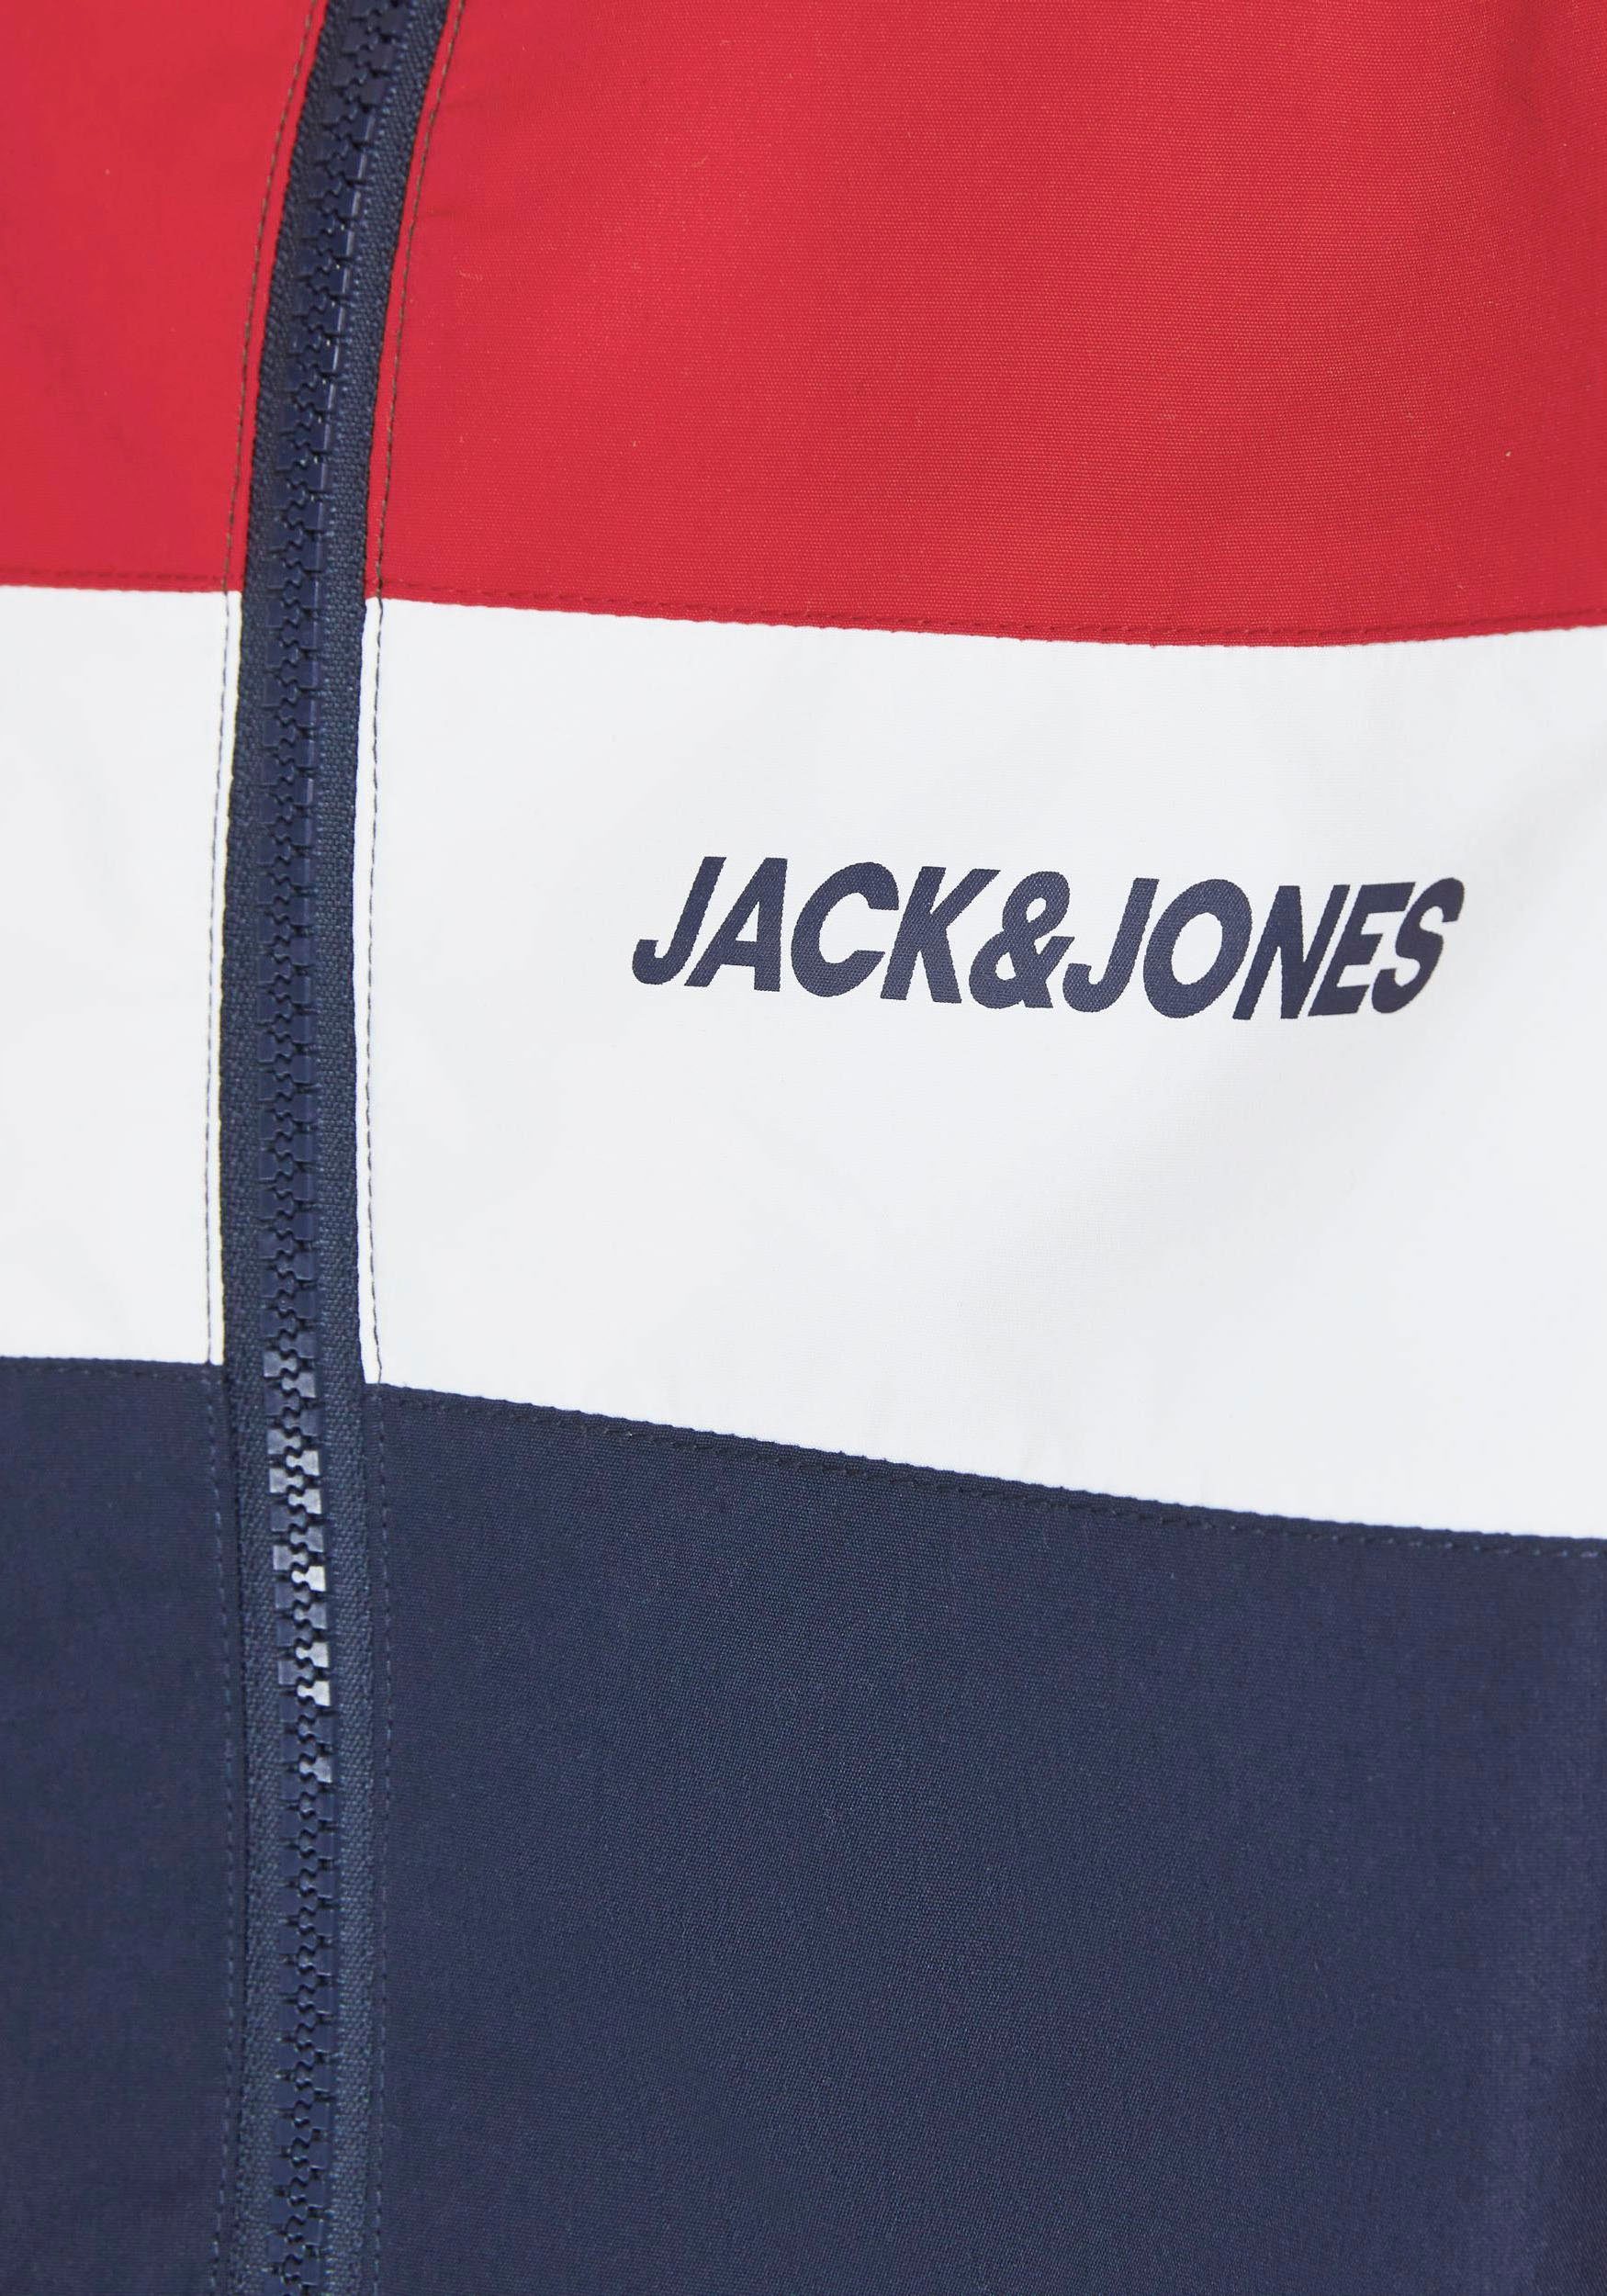 & Jones Outdoorjacke red Jack Junior true